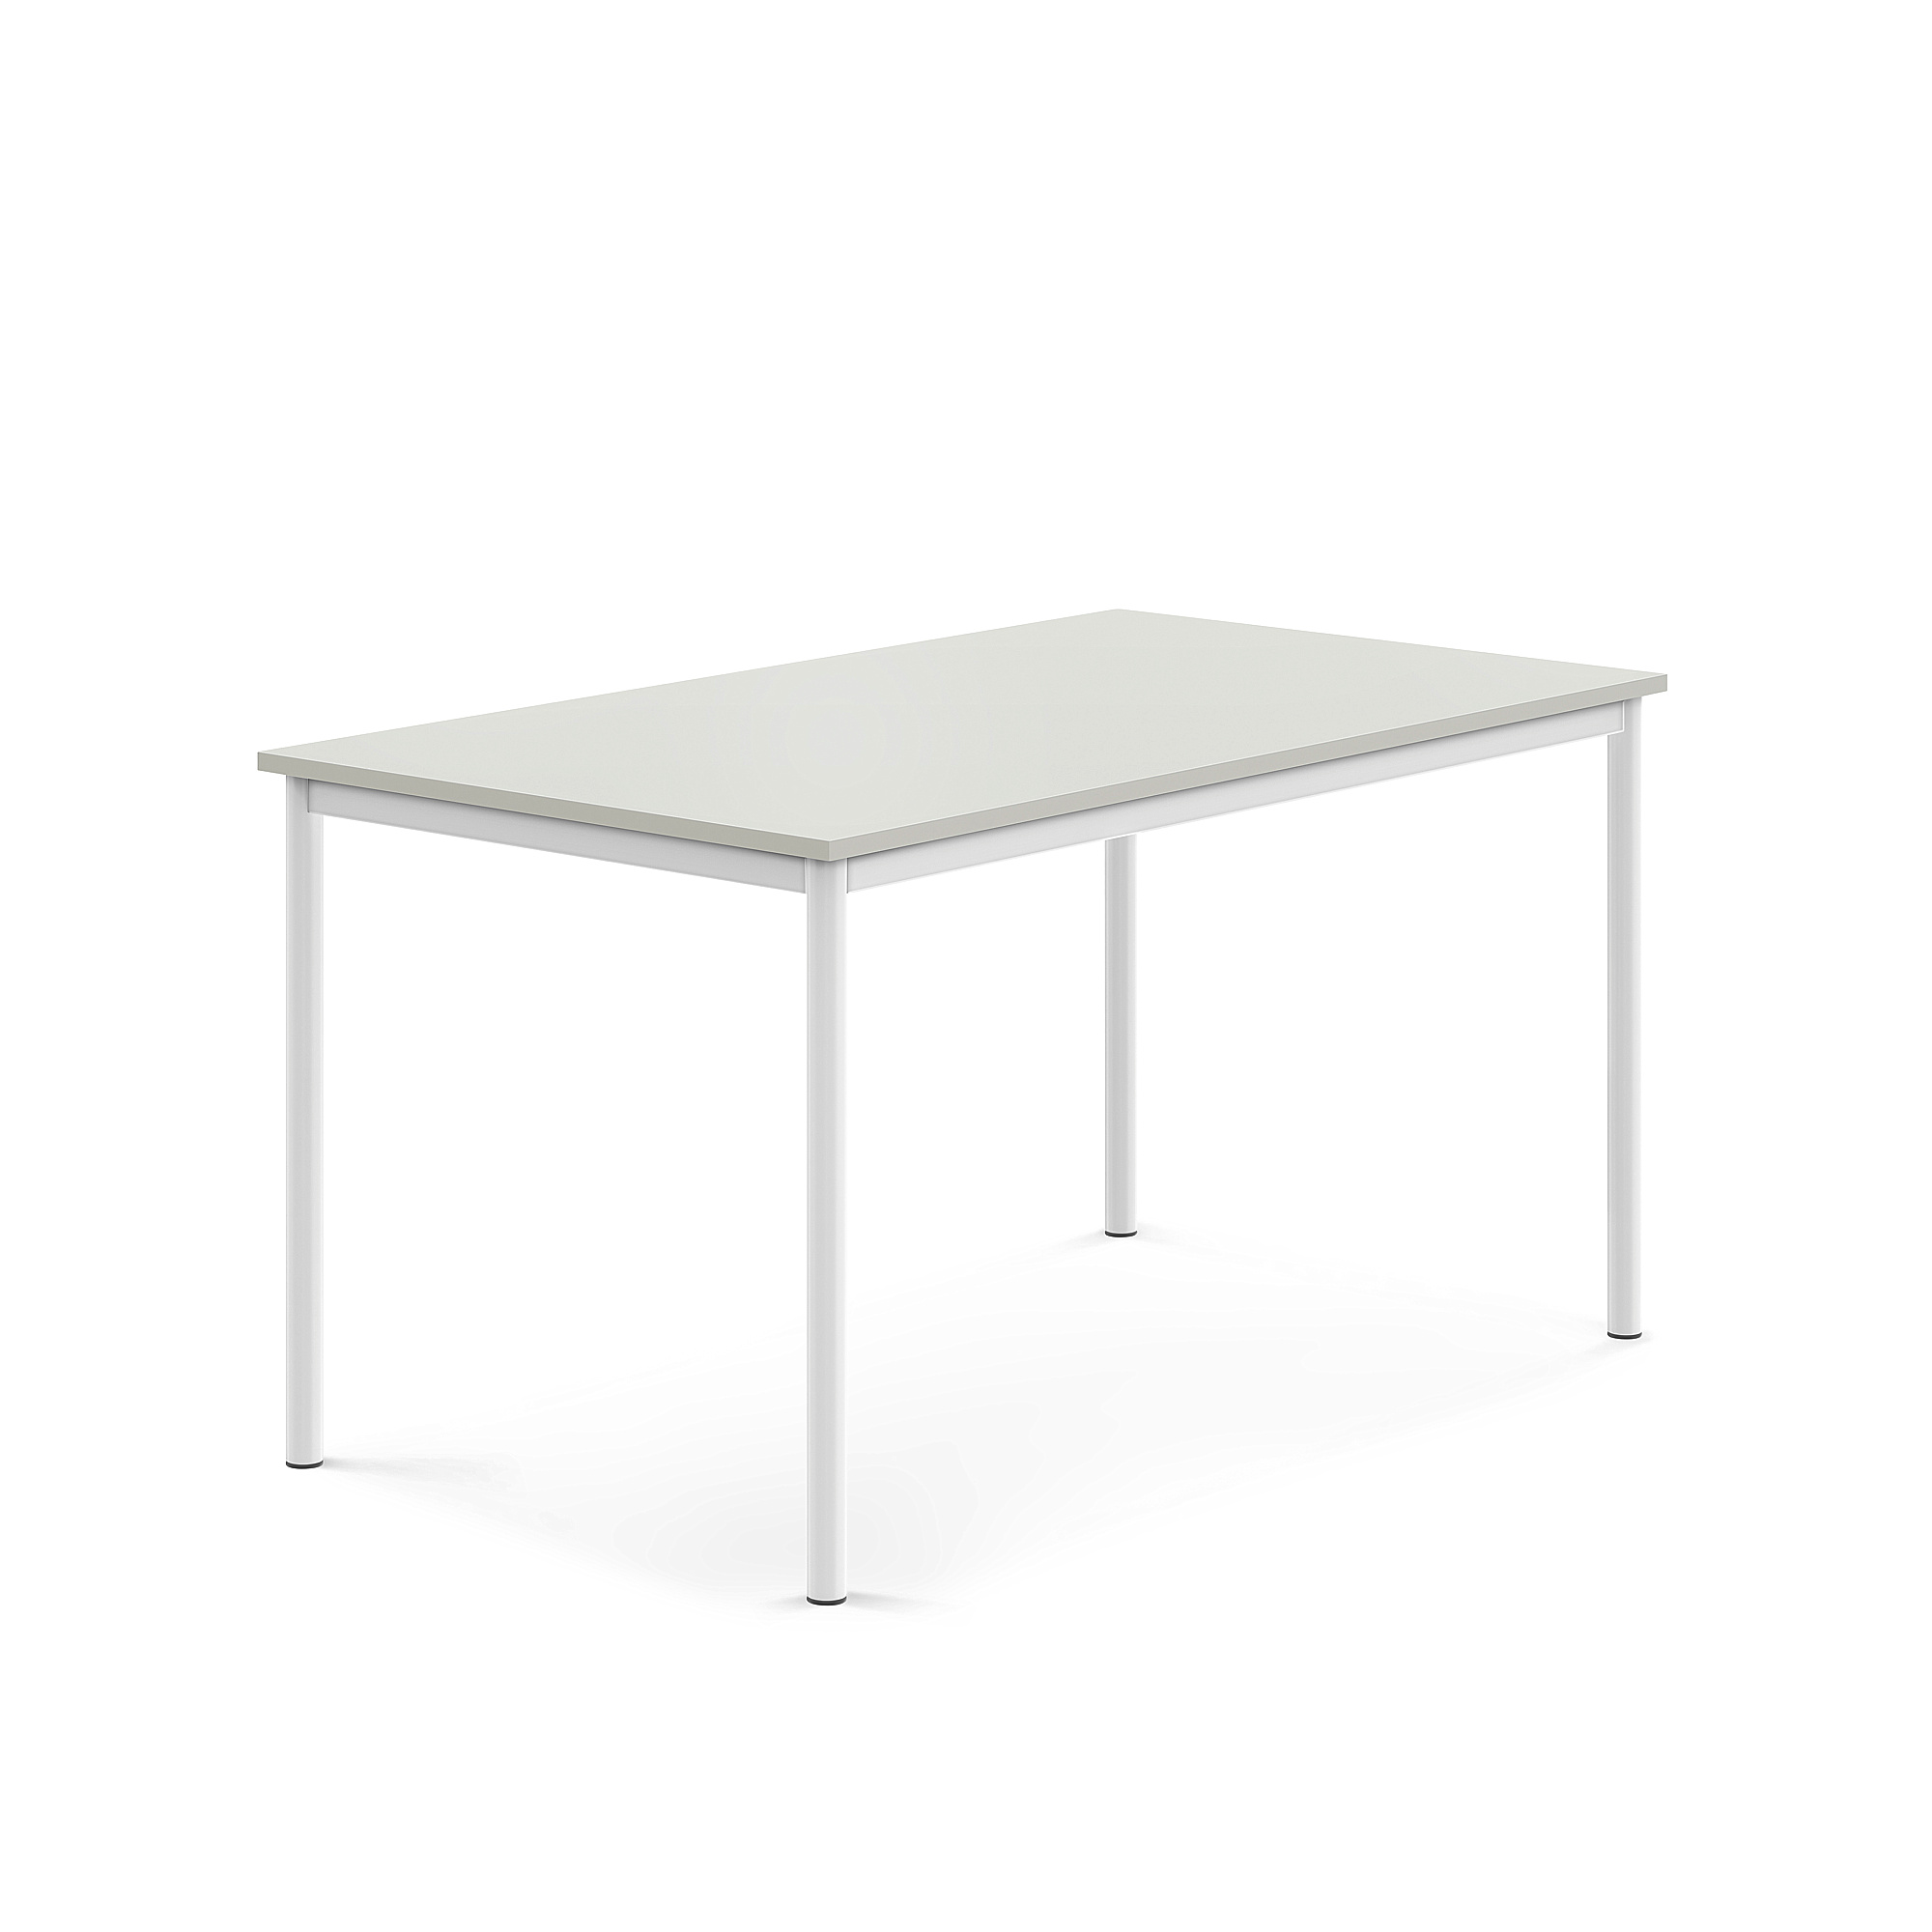 Stůl SONITUS, 1400x800x720 mm, bílé nohy, HPL deska tlumící hluk, šedá